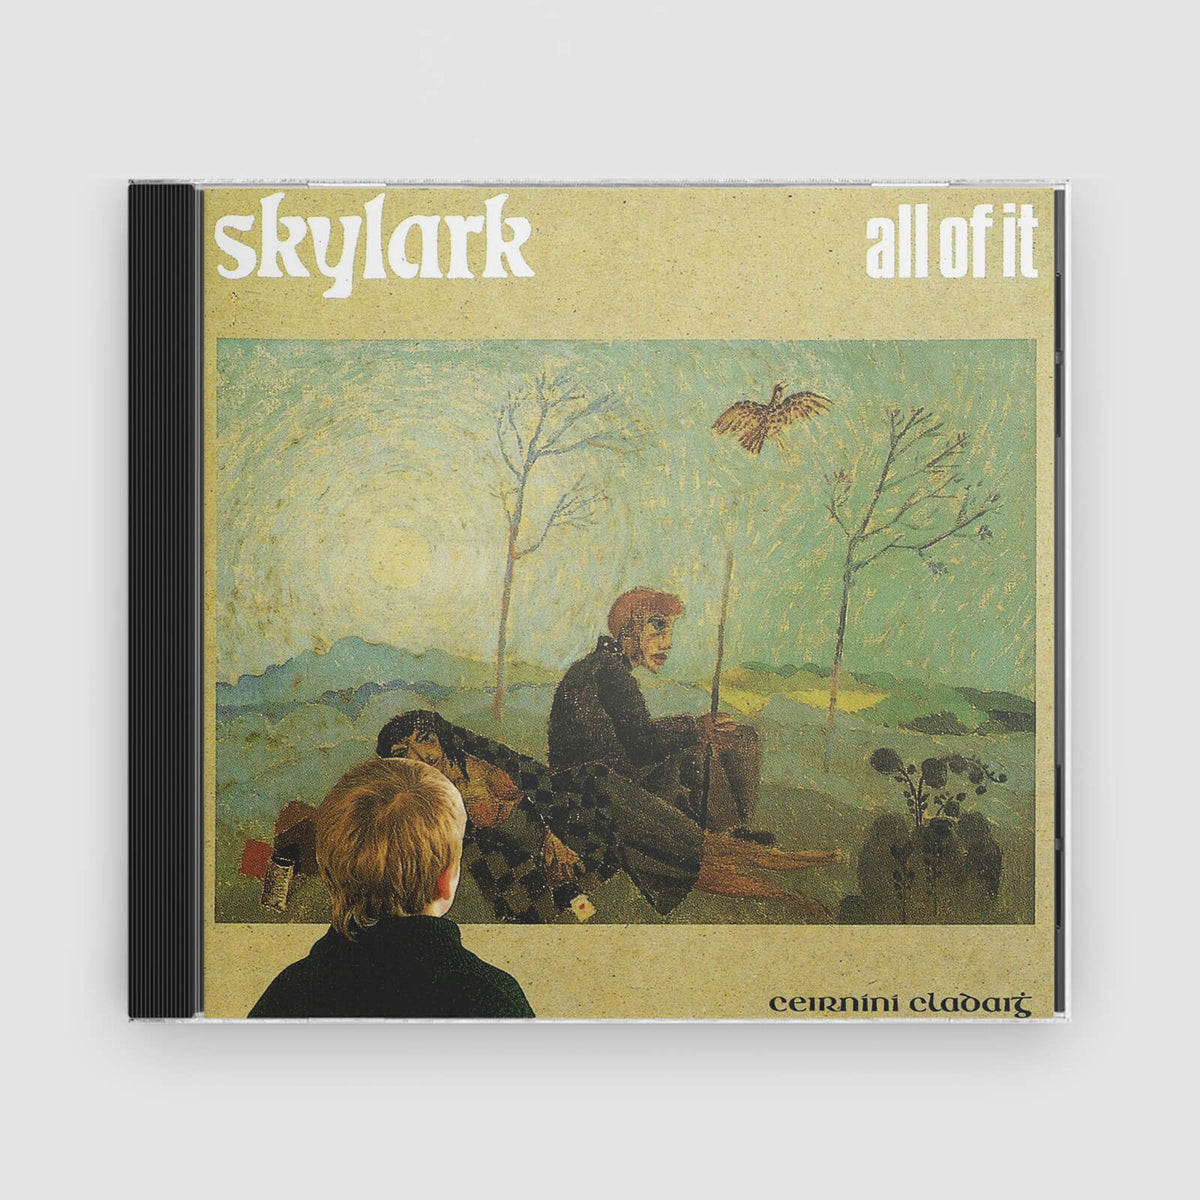 Skylark : All of It